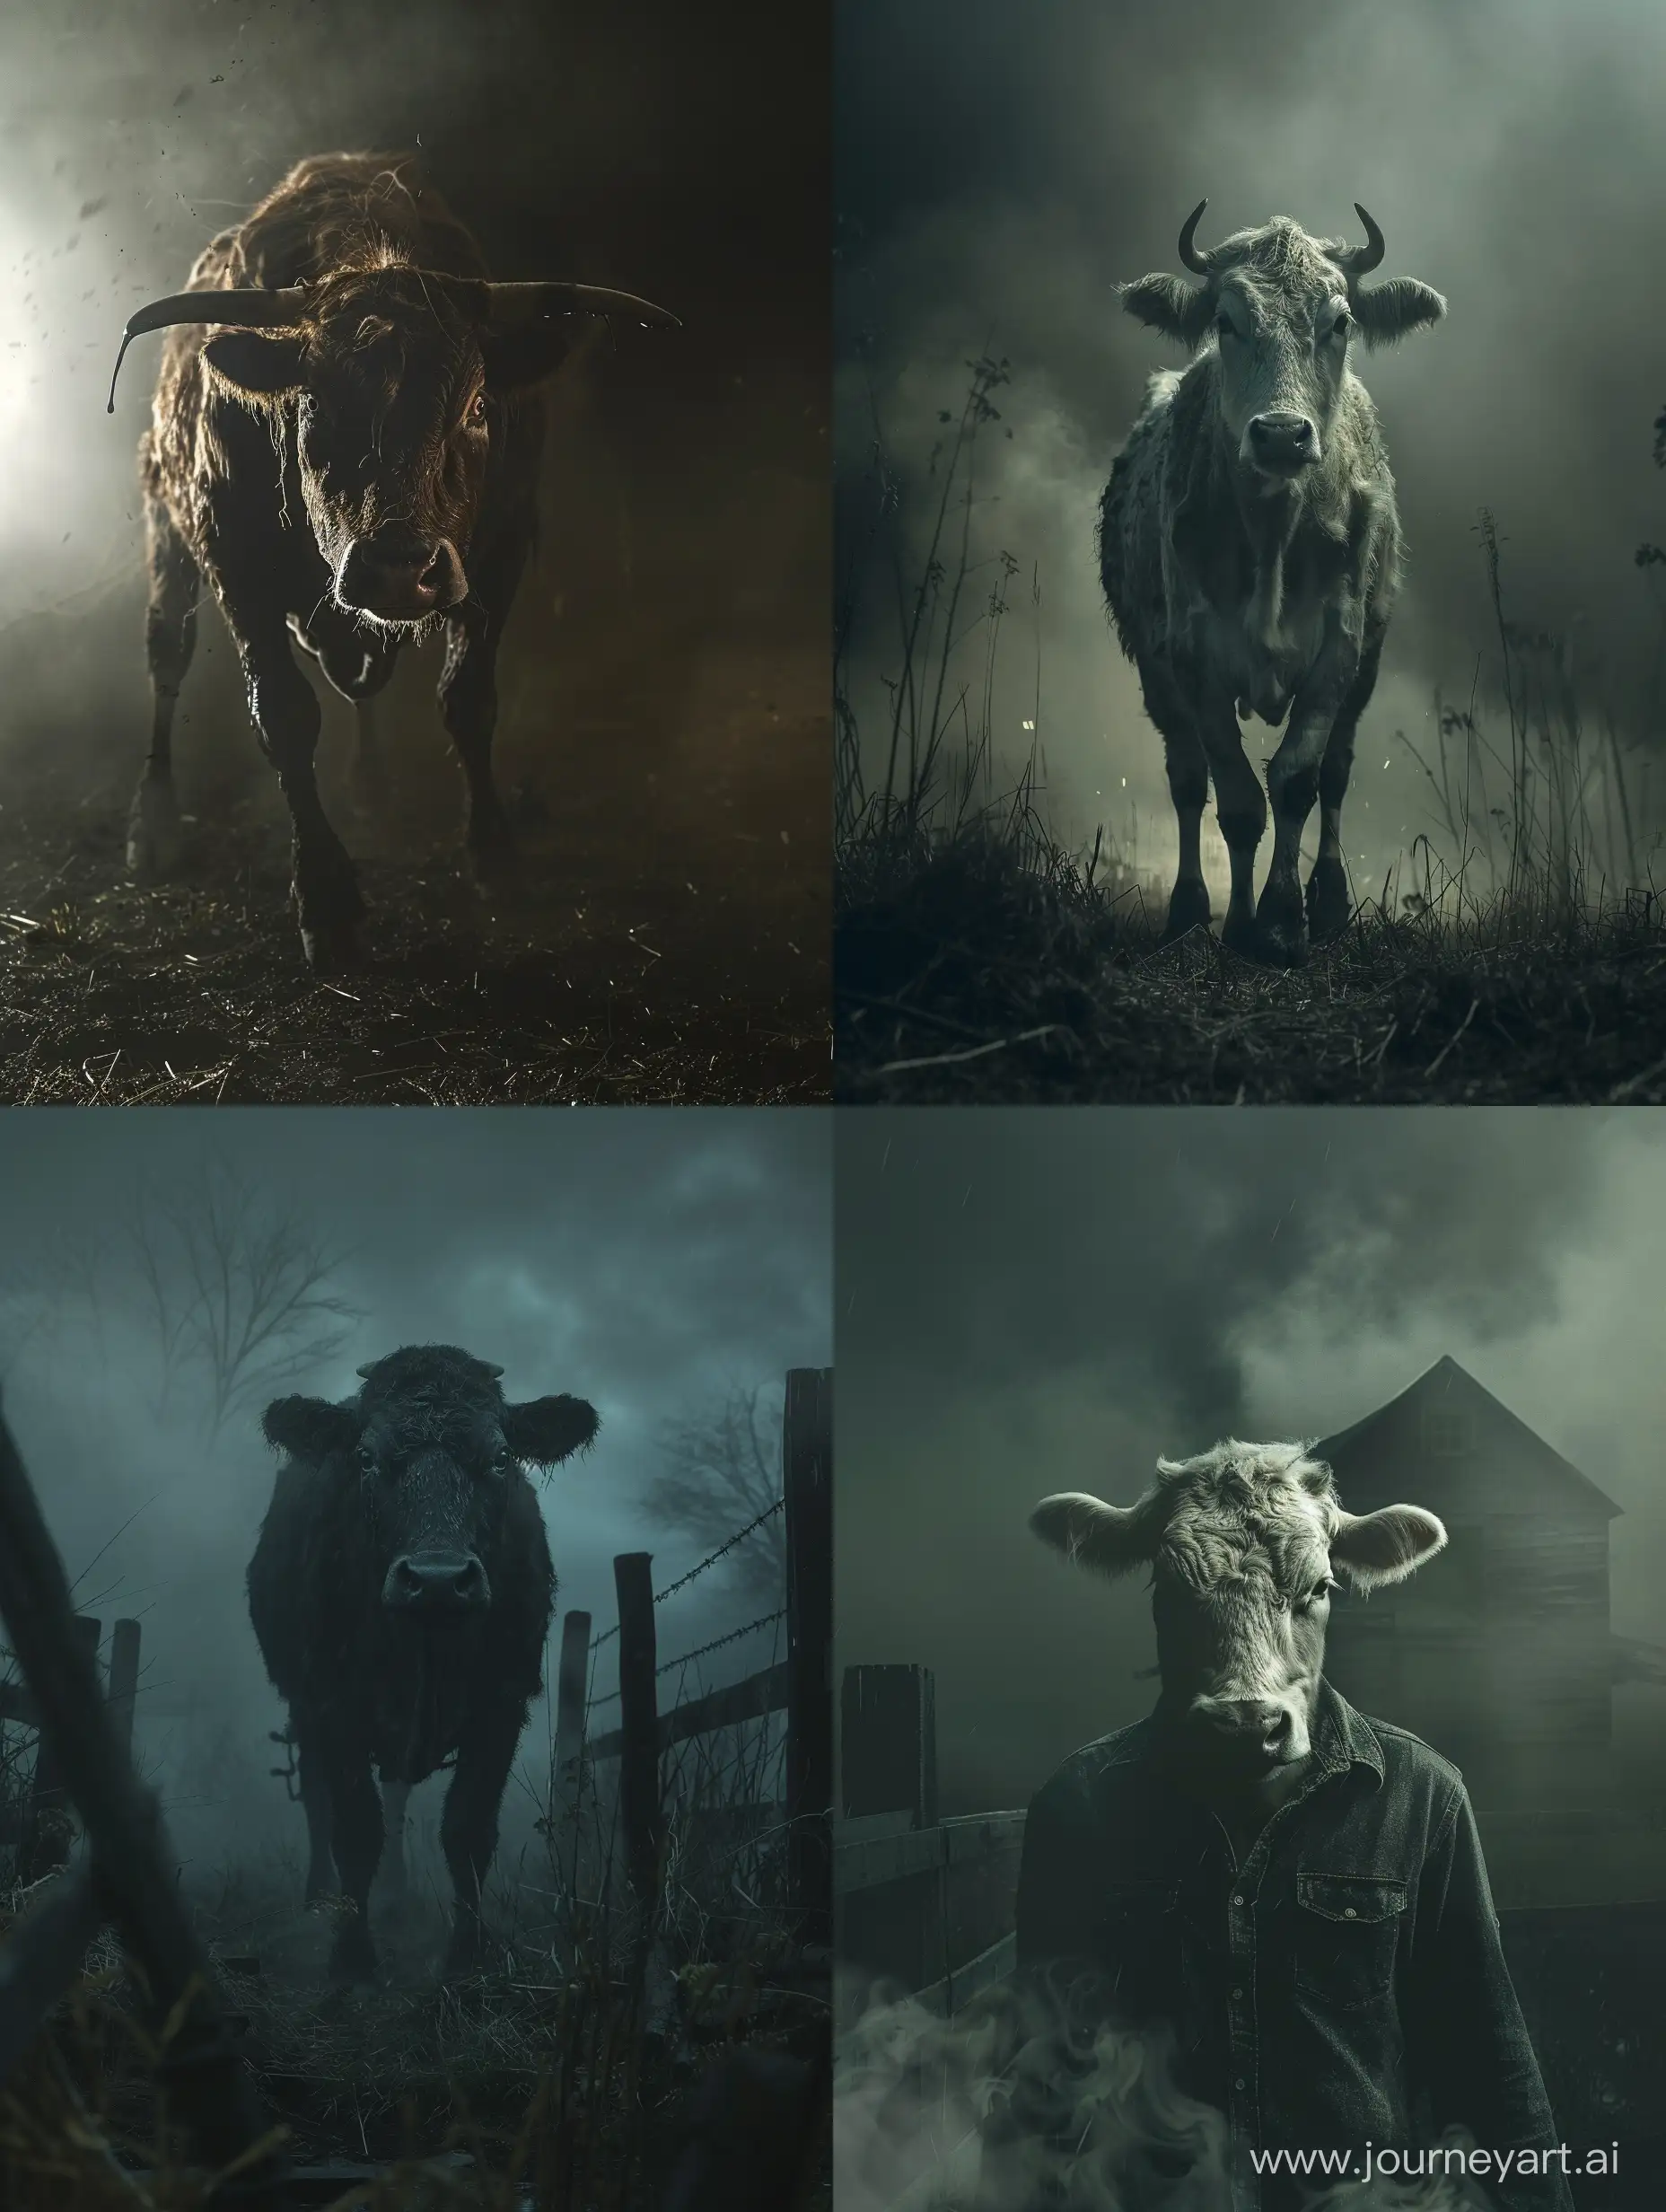 Eerie-Farm-Scene-Mysterious-CowHeaded-Creature-in-Misty-Chaos